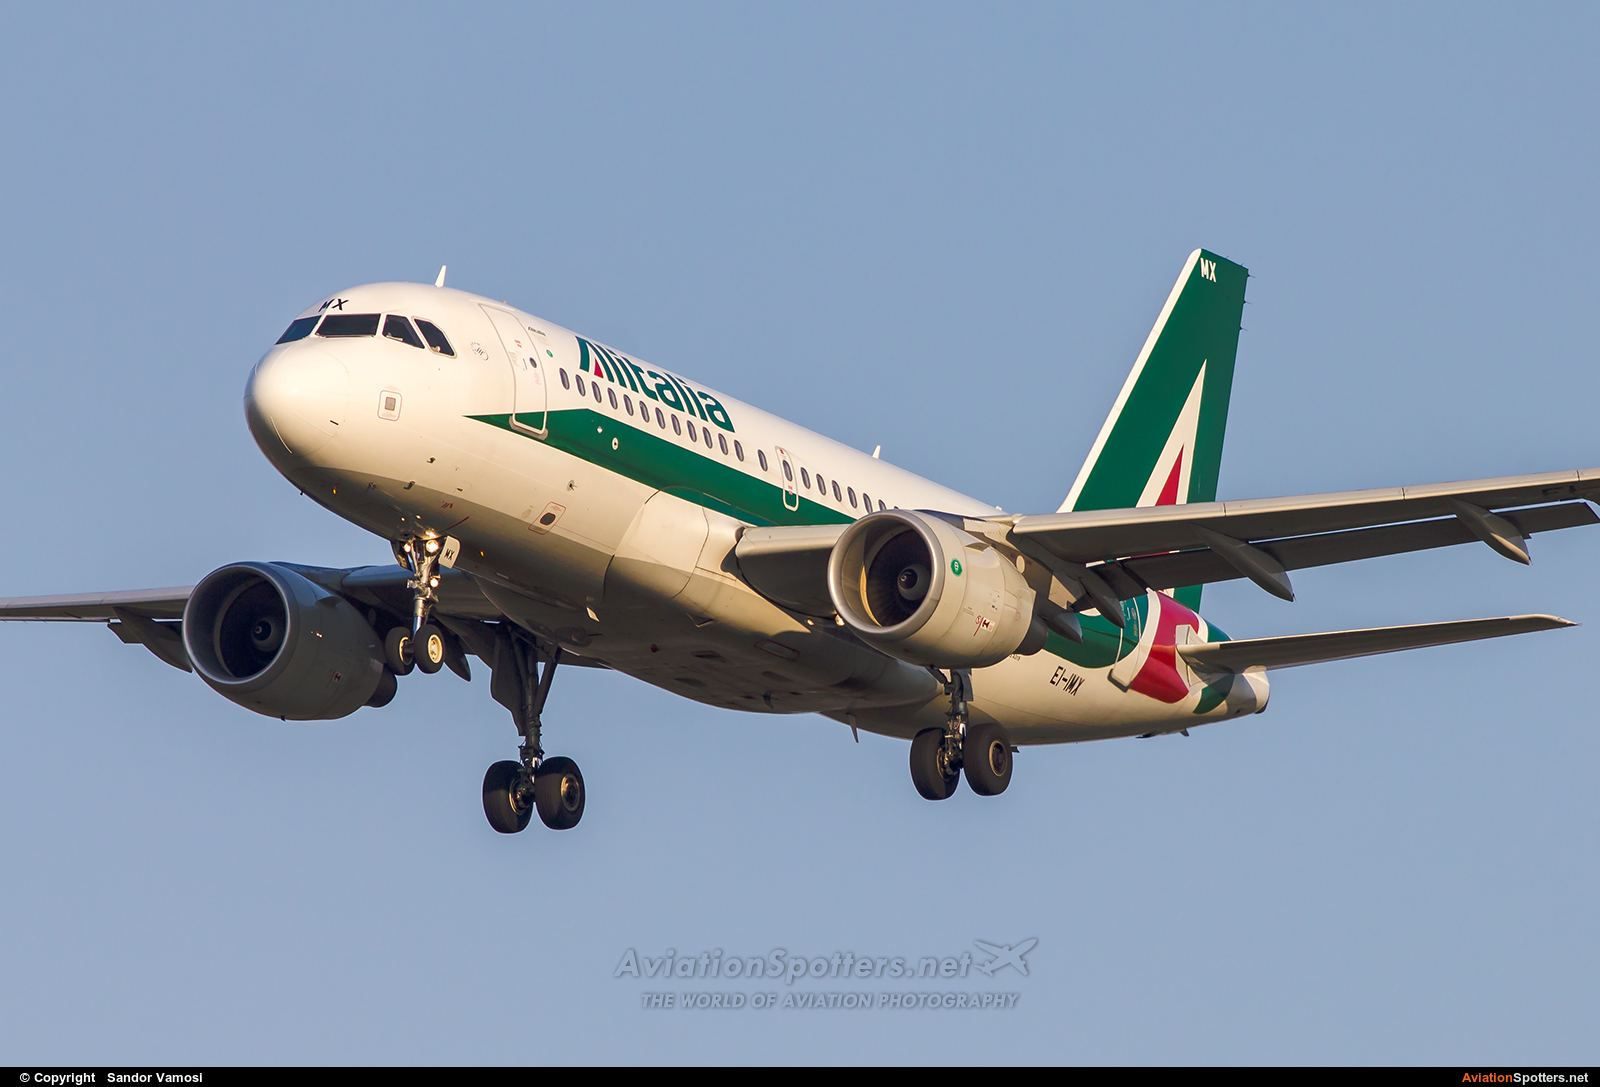 Alitalia  -  A319-111  (EI-IMX) By Sandor Vamosi (ALEX67)